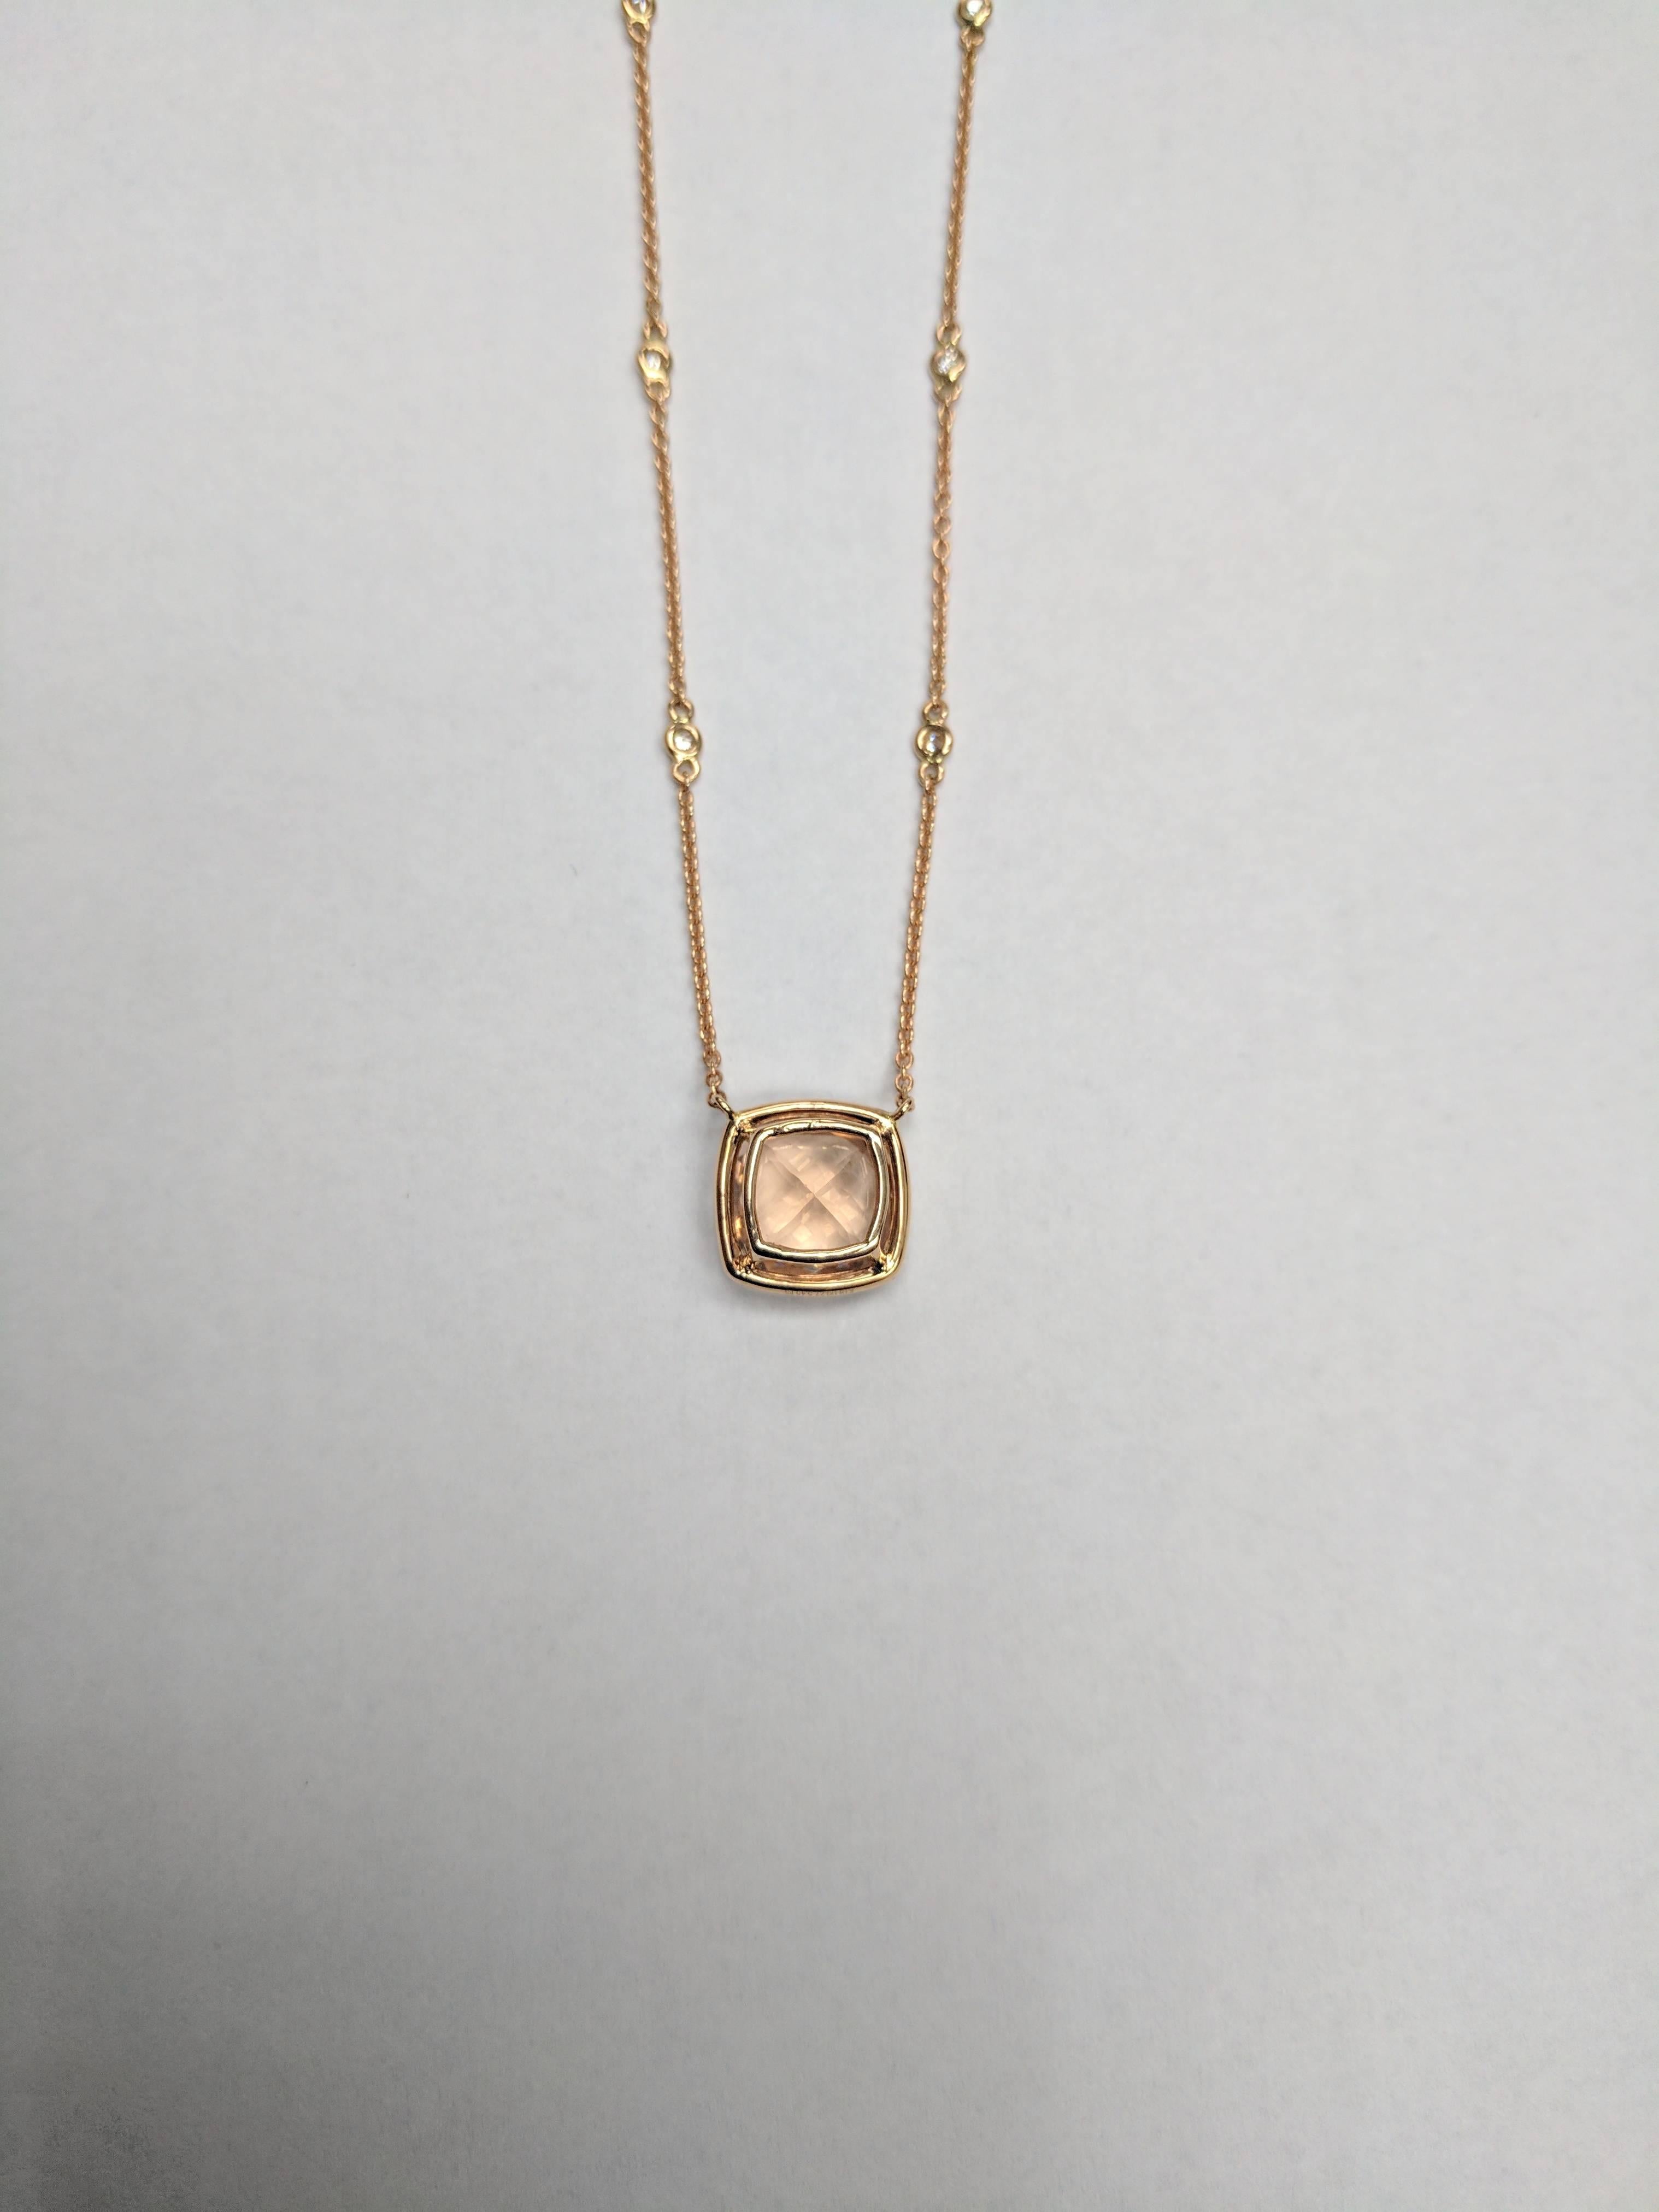 Contemporary Frederic Sage 5.45 Carat Morganite Diamond Pendant Necklace